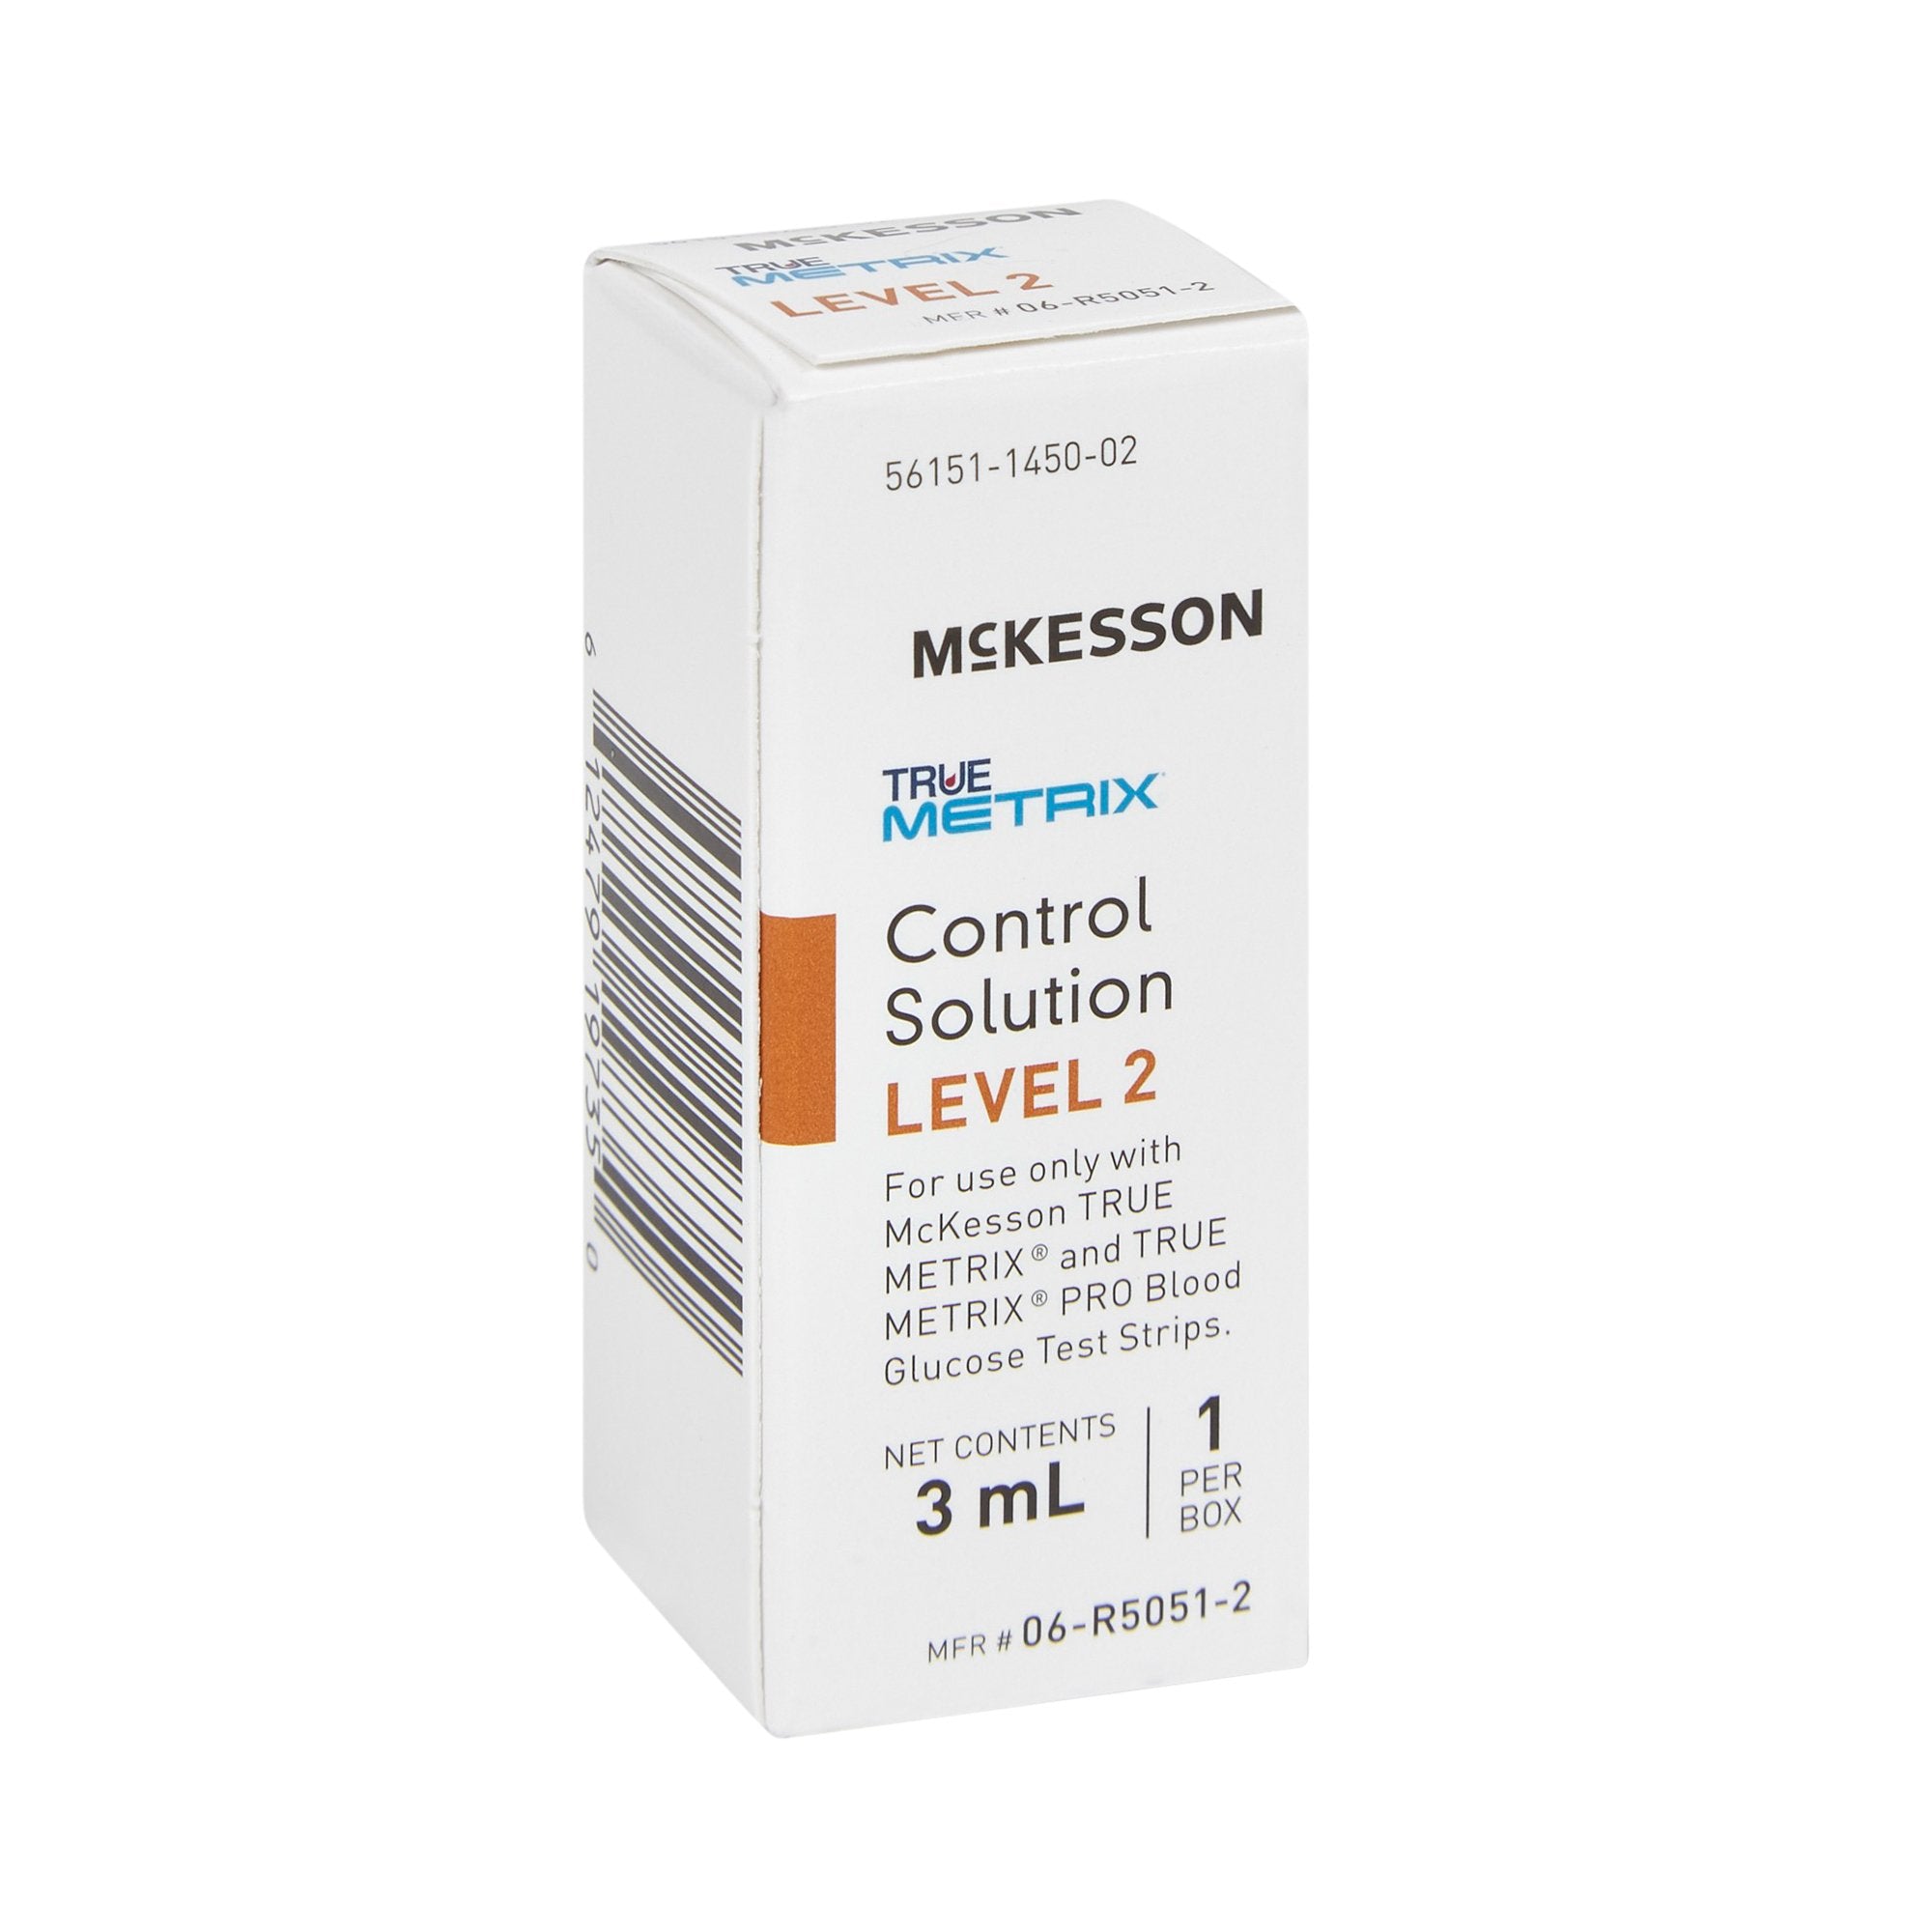 Blood Glucose Control Solution McKesson TRUE METRIX 3 mL Level 2